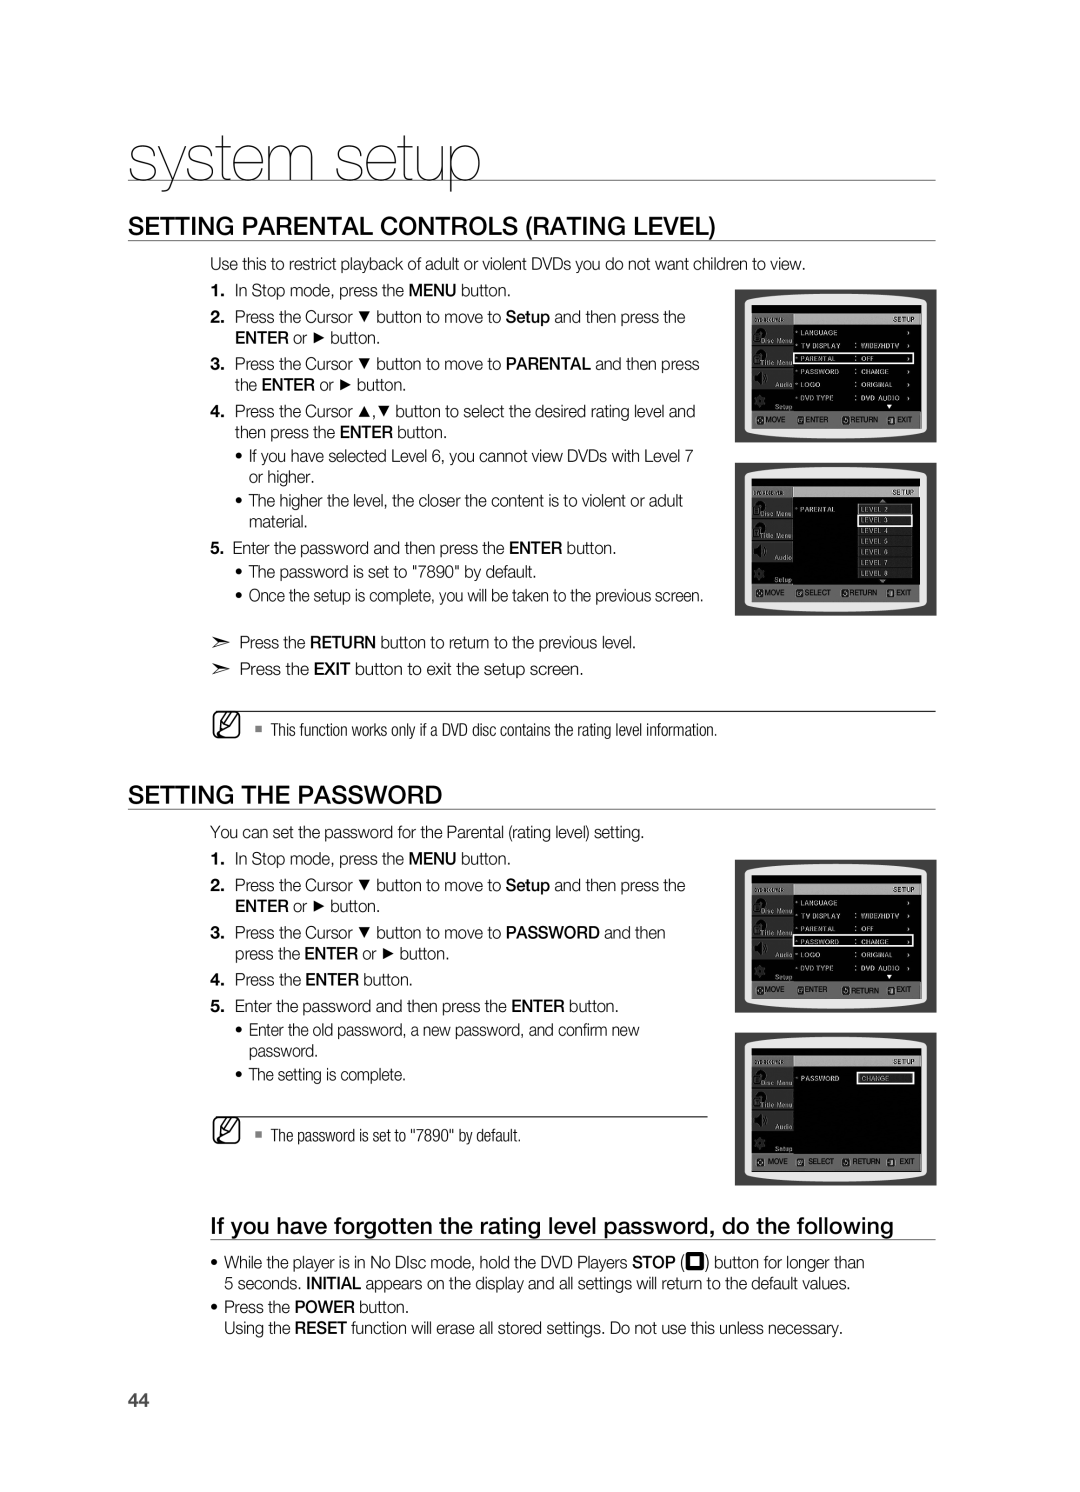 Samsung HT-A100 user manual Setting Parental Controls Rating Level, Setting the Password, system setup 